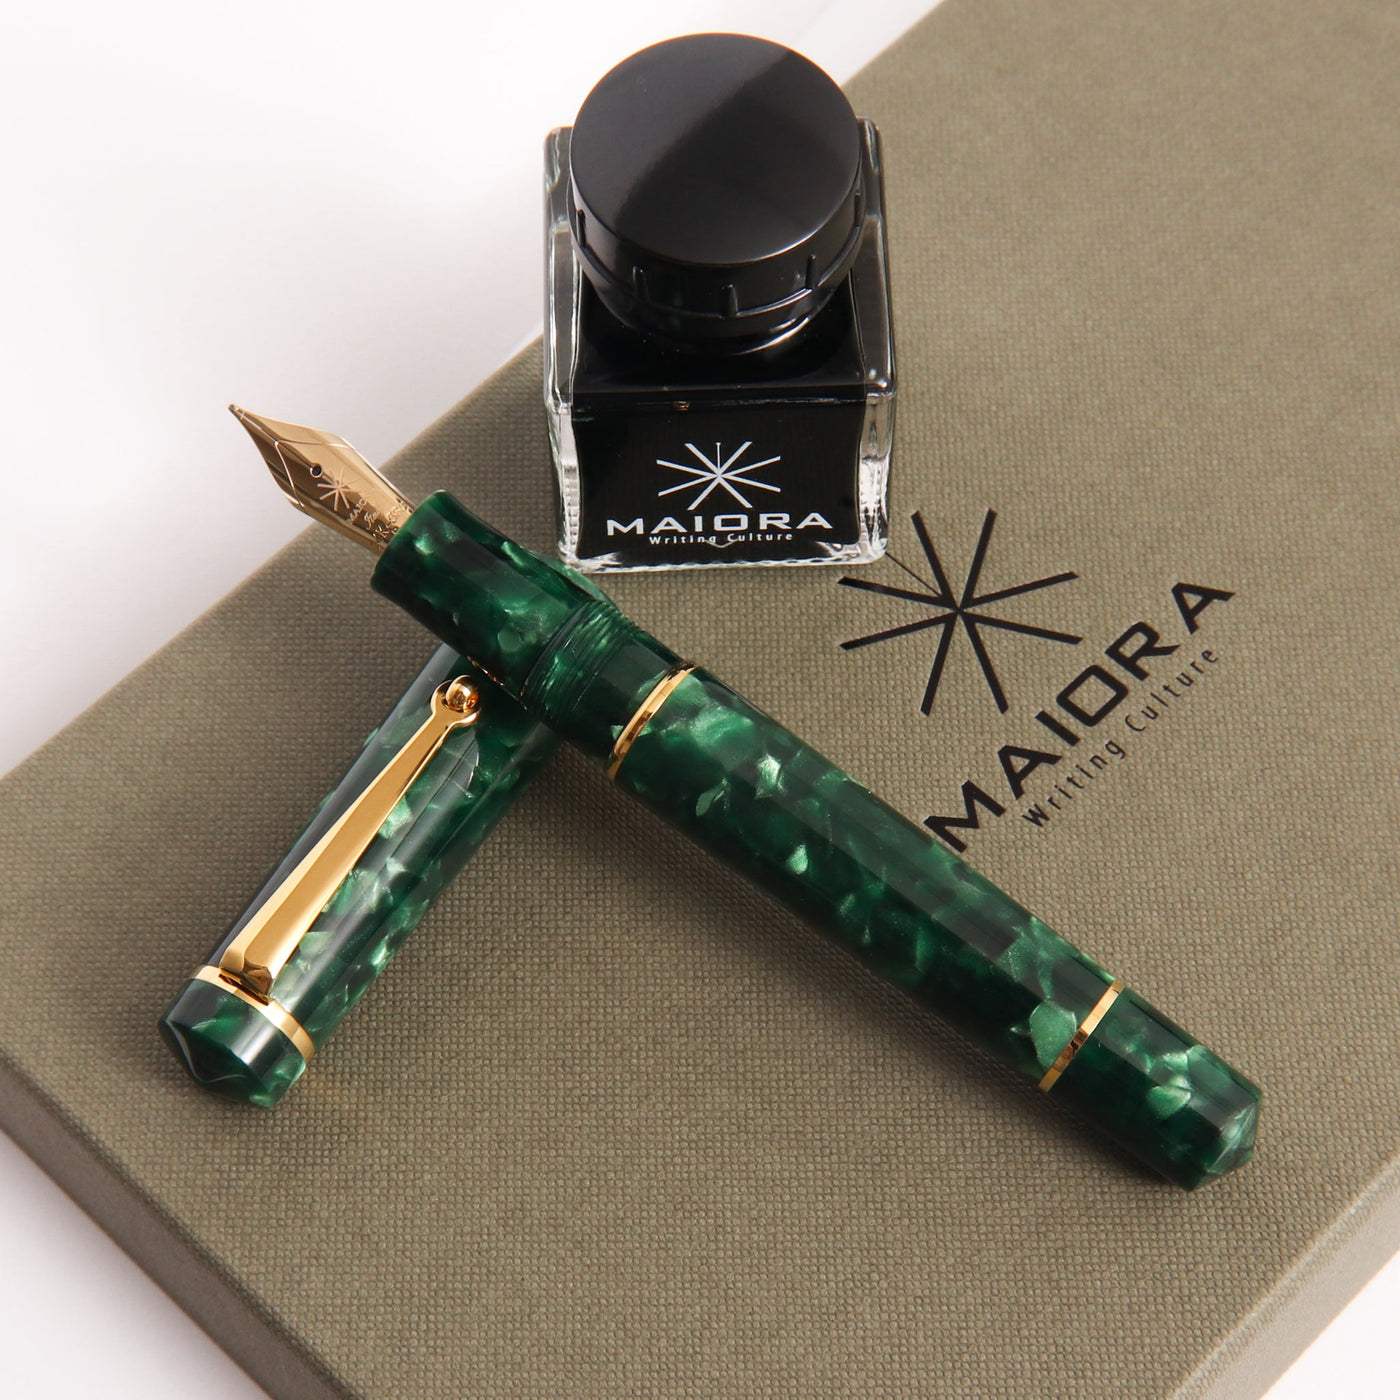 Maiora Alpha Smeraldo Gold Trim Limited Edition 38 Fountain Pen